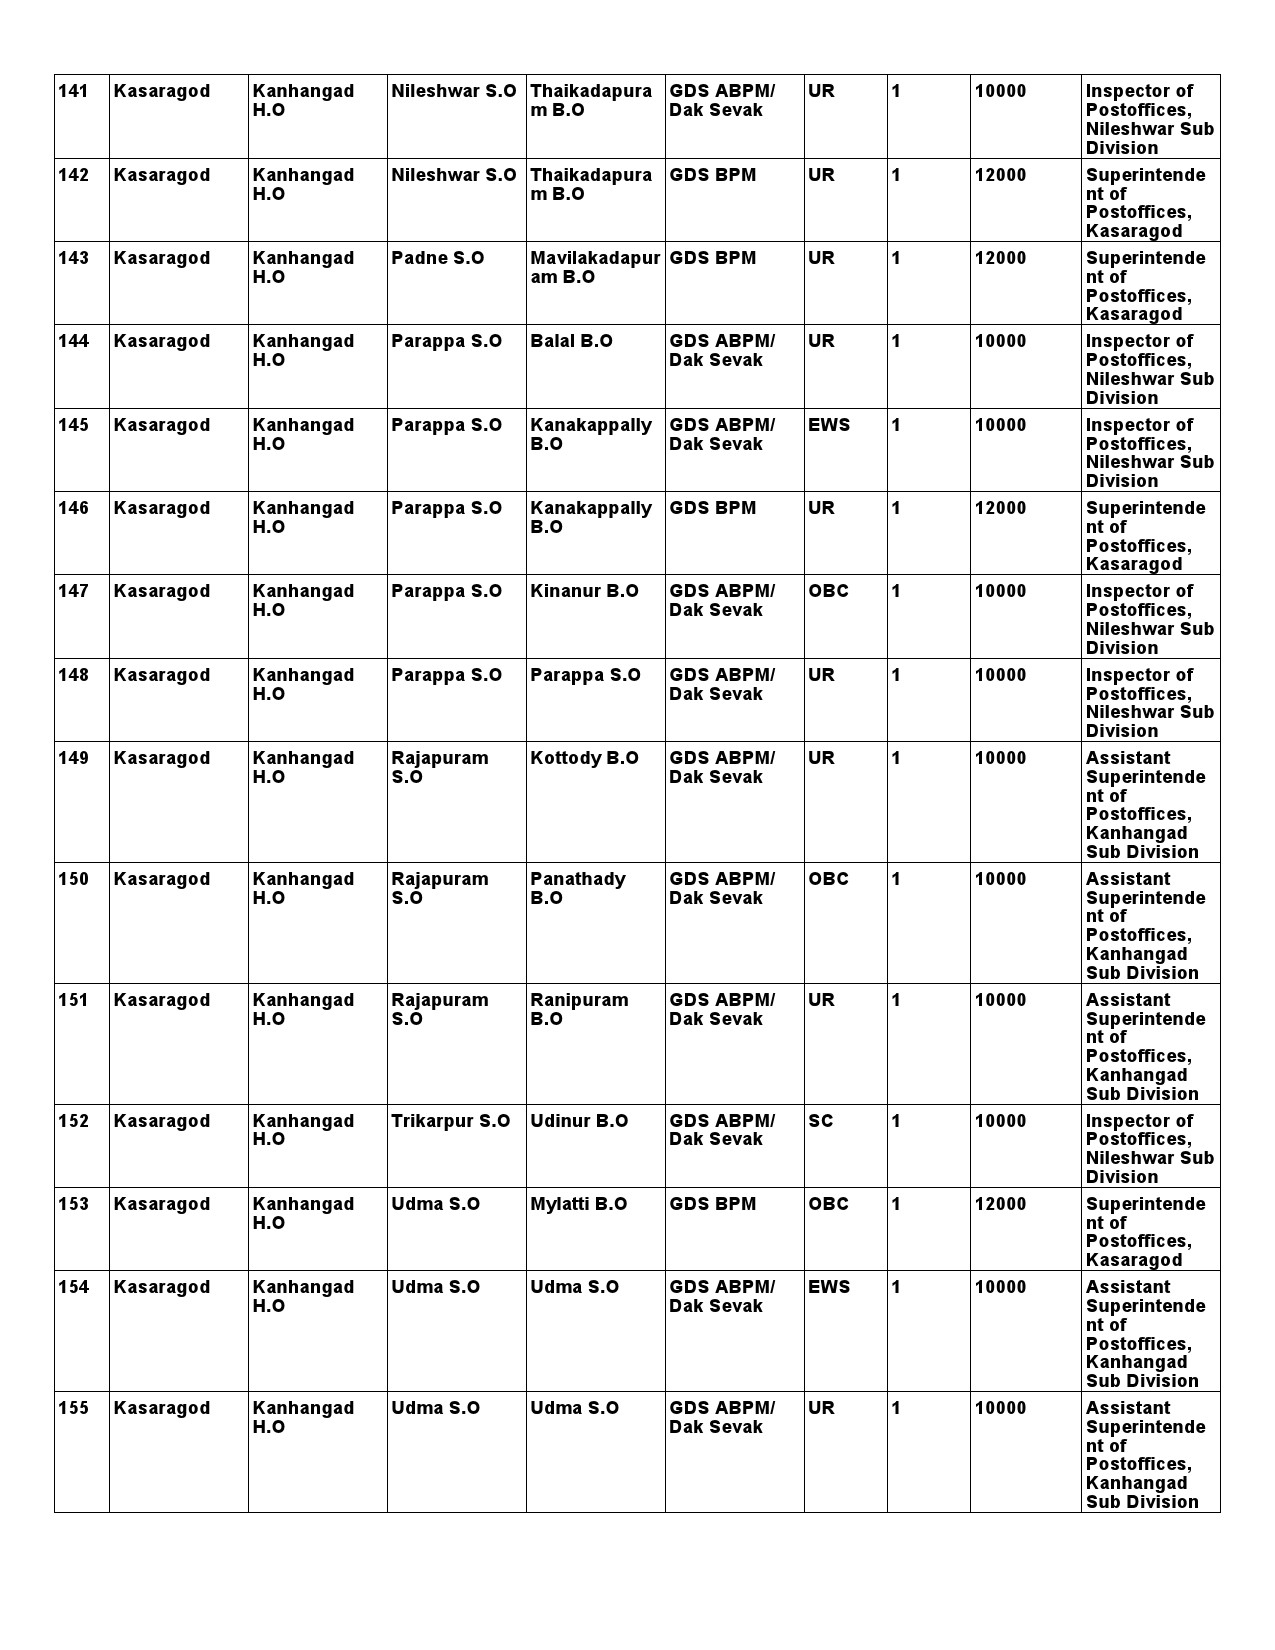 Kerala Postal Circle GDS Recruitment 2021 notification - Notification Image 26